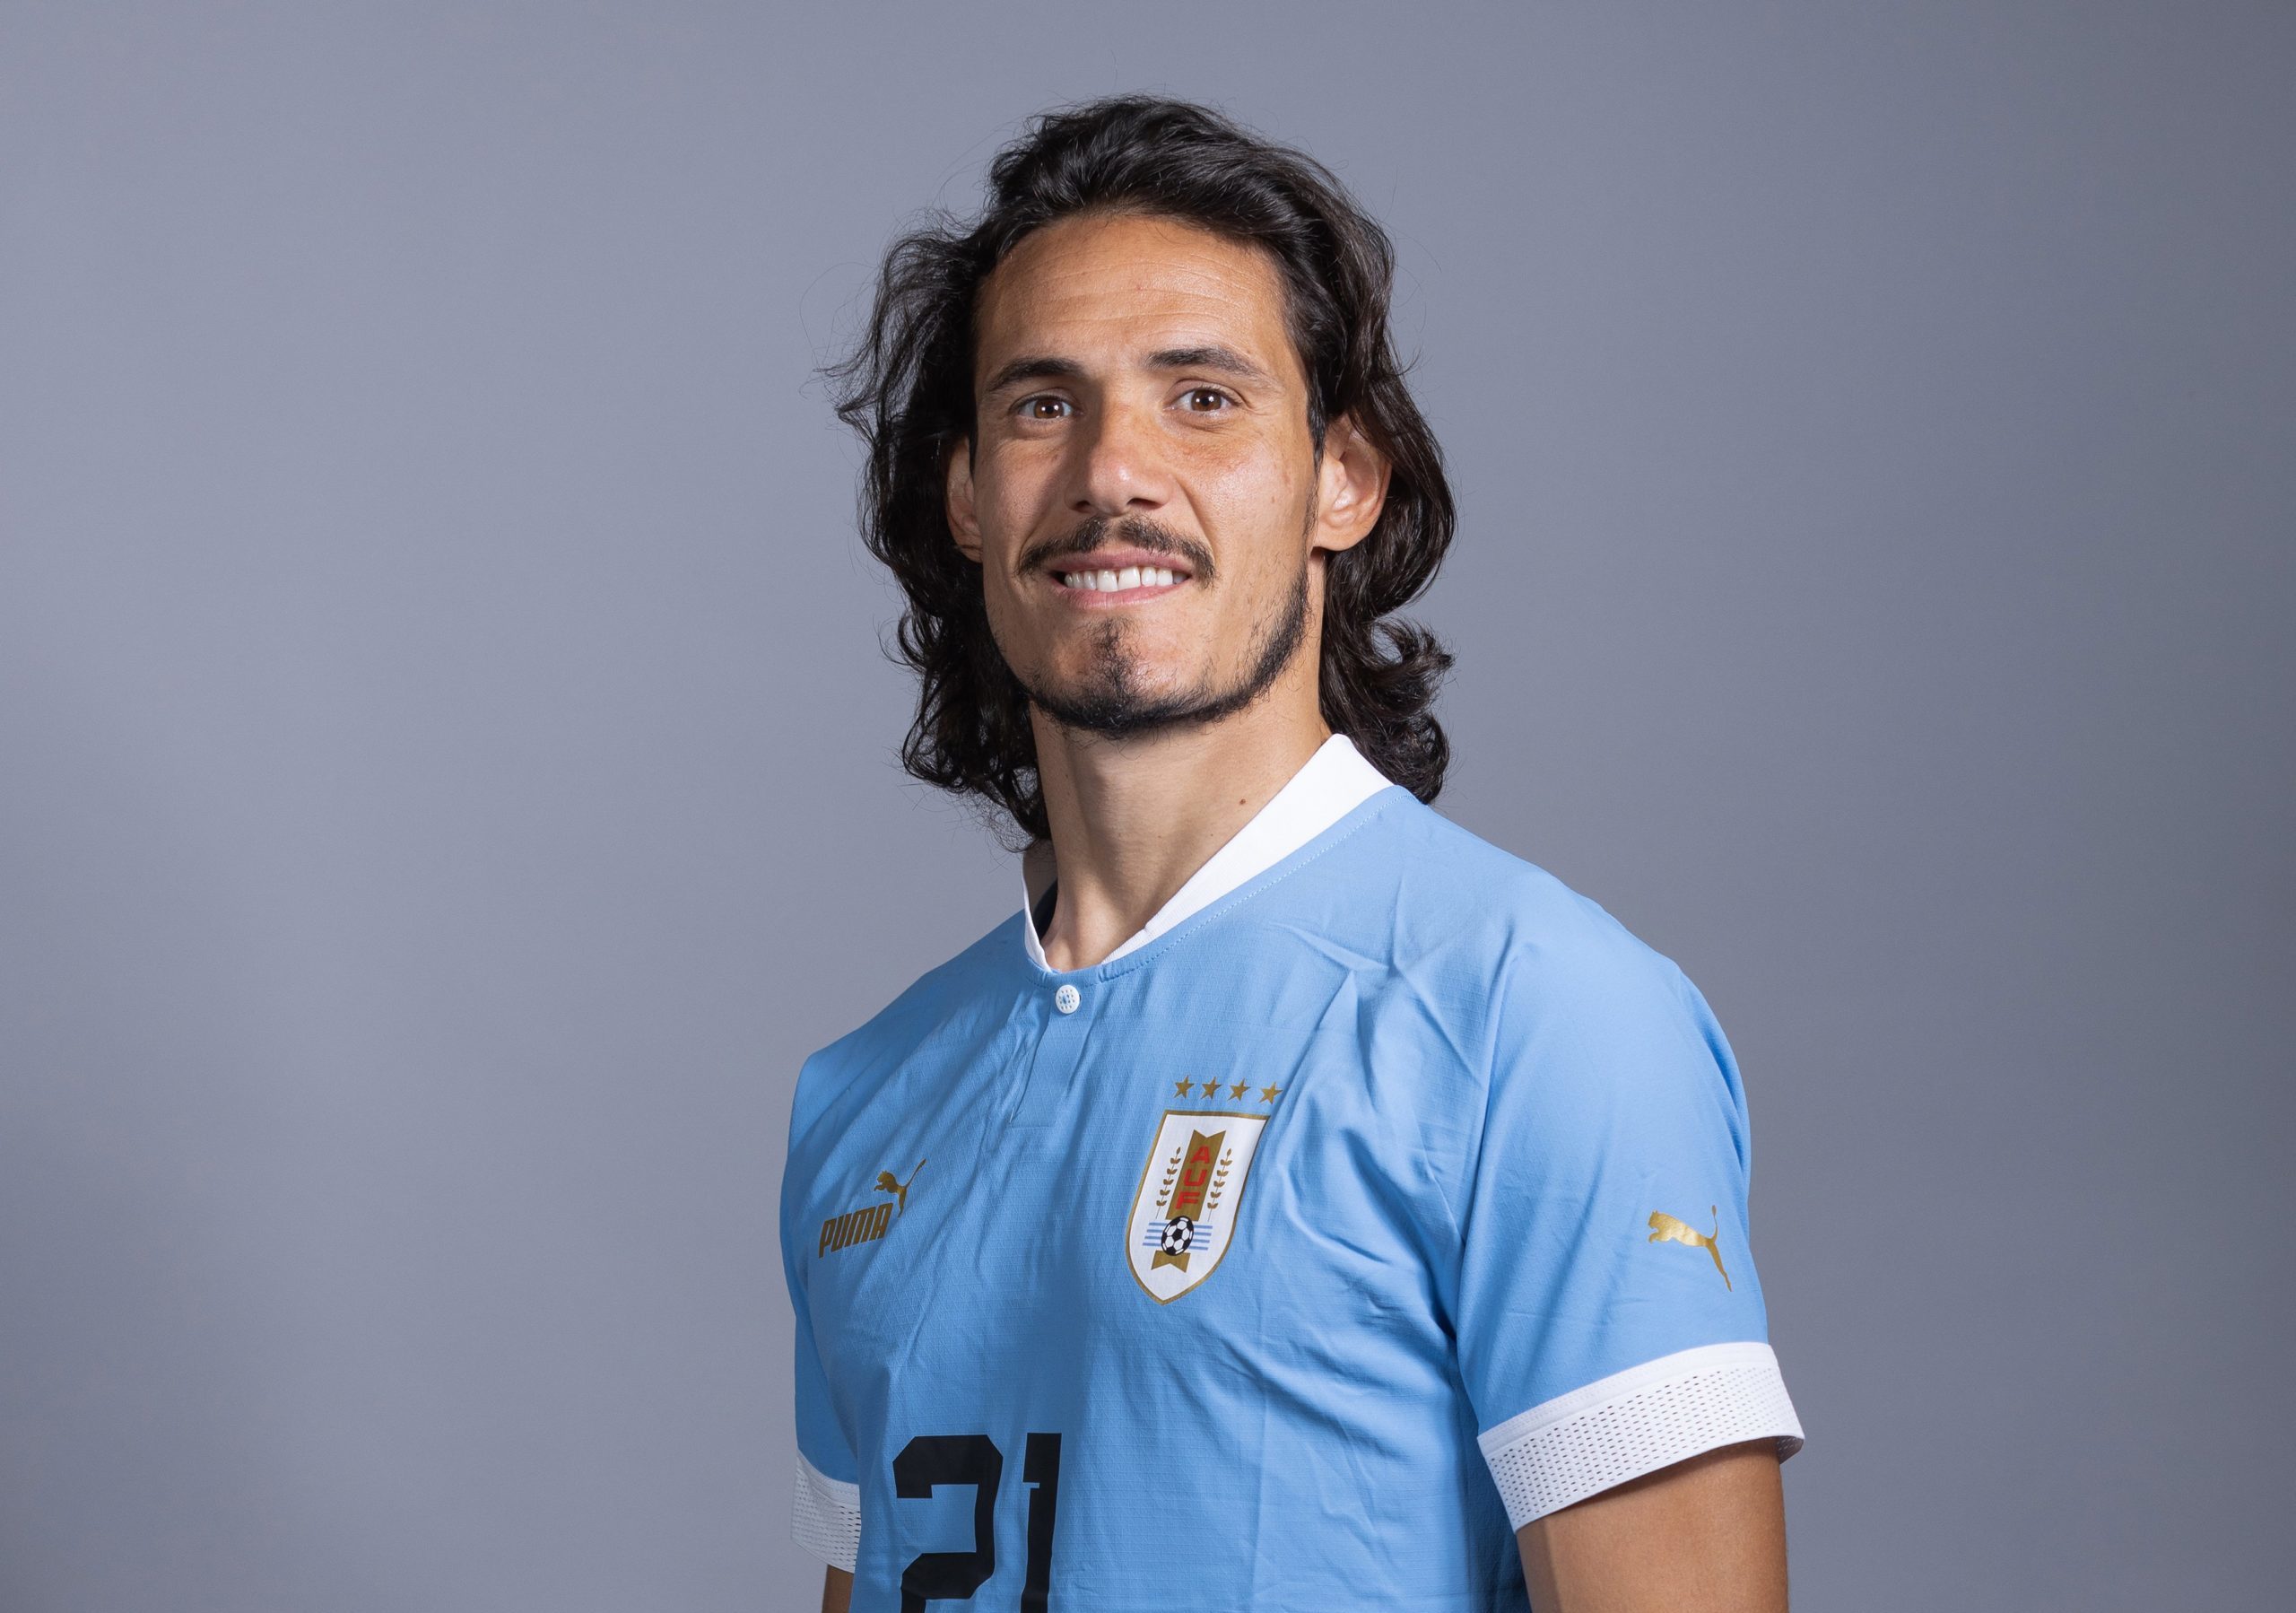 Histórica Camiseta Selección Uruguaya de Fútbol